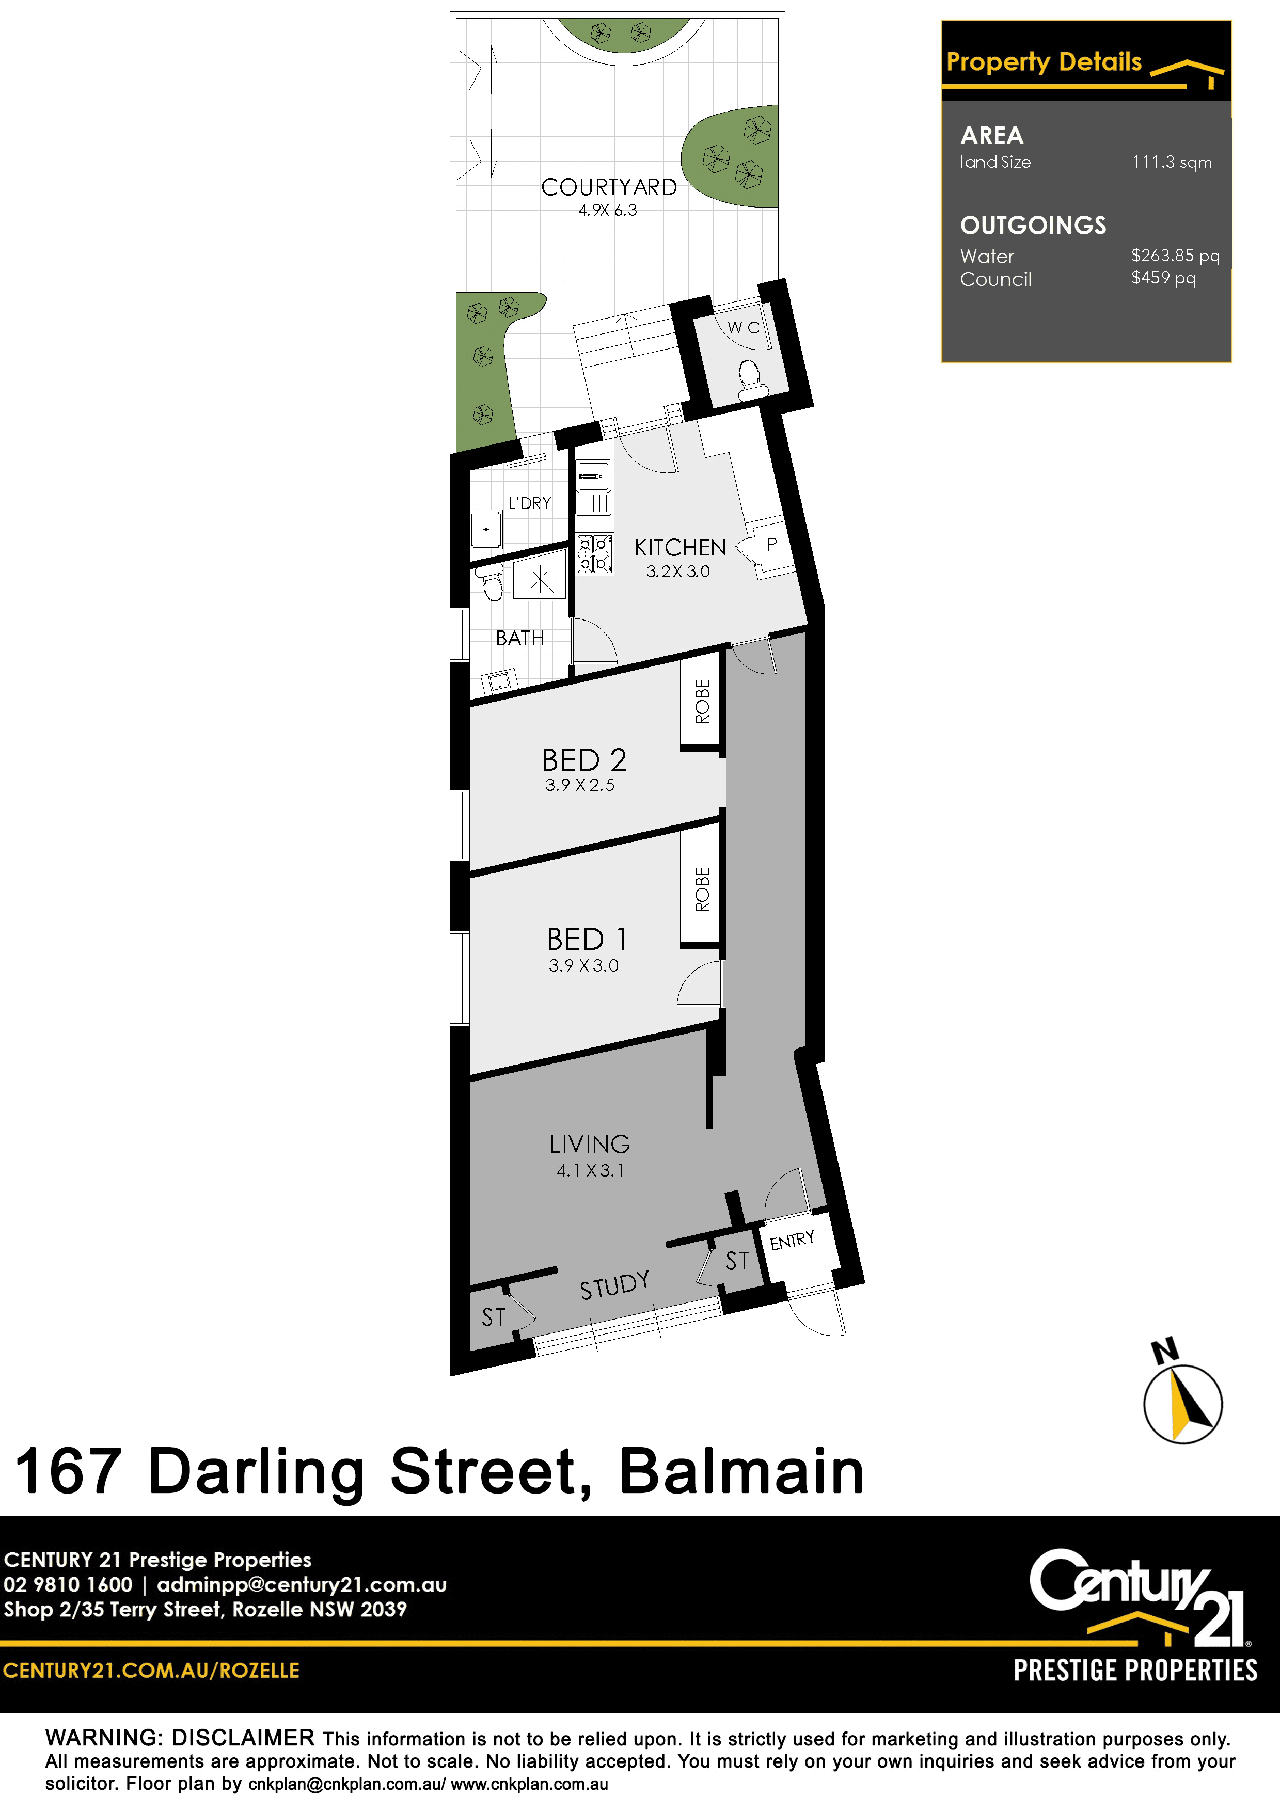 167 Darling Street, Balmain, NSW 2041